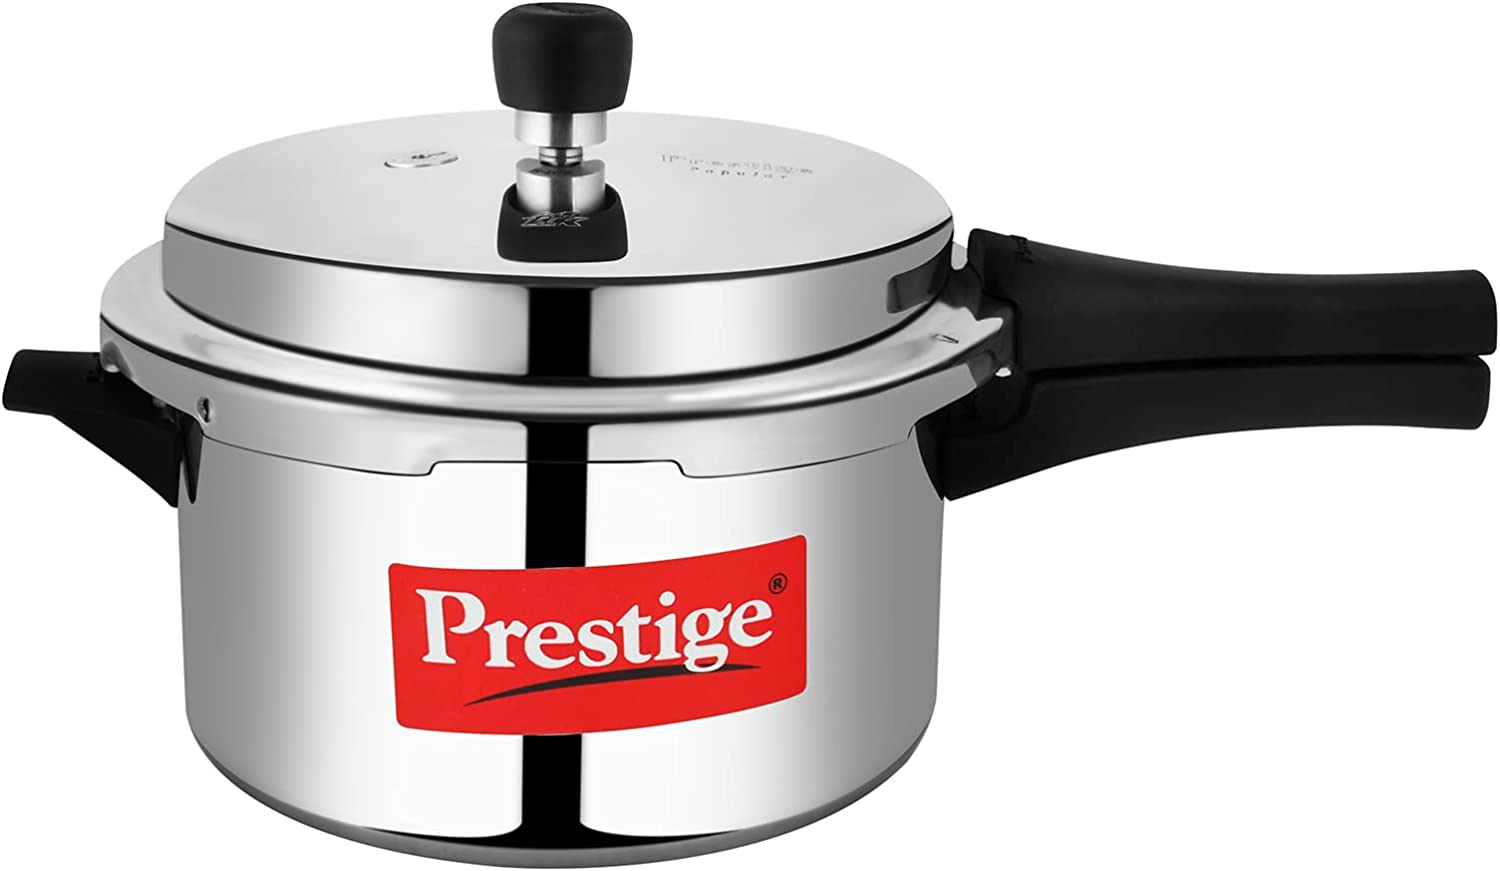 https://www.dontwasteyourmoney.com/wp-content/uploads/2021/03/prestige-stainless-steel-stovetop-pressure-cooker-3-liter.jpg